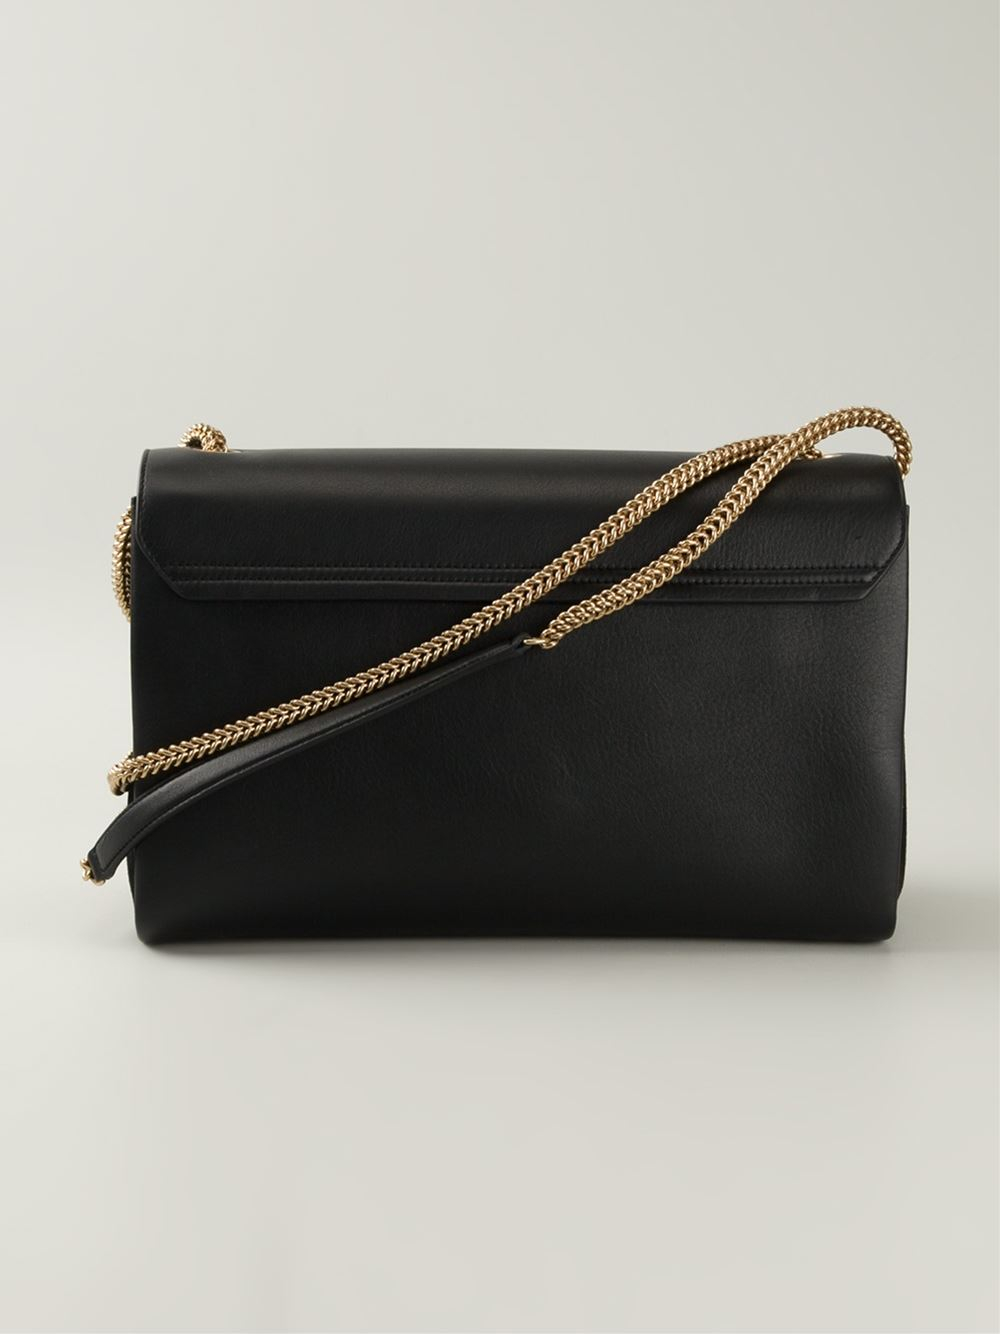 Nina Ricci Marché Chaine Medium Leather Shoulder Bag in Black | Lyst